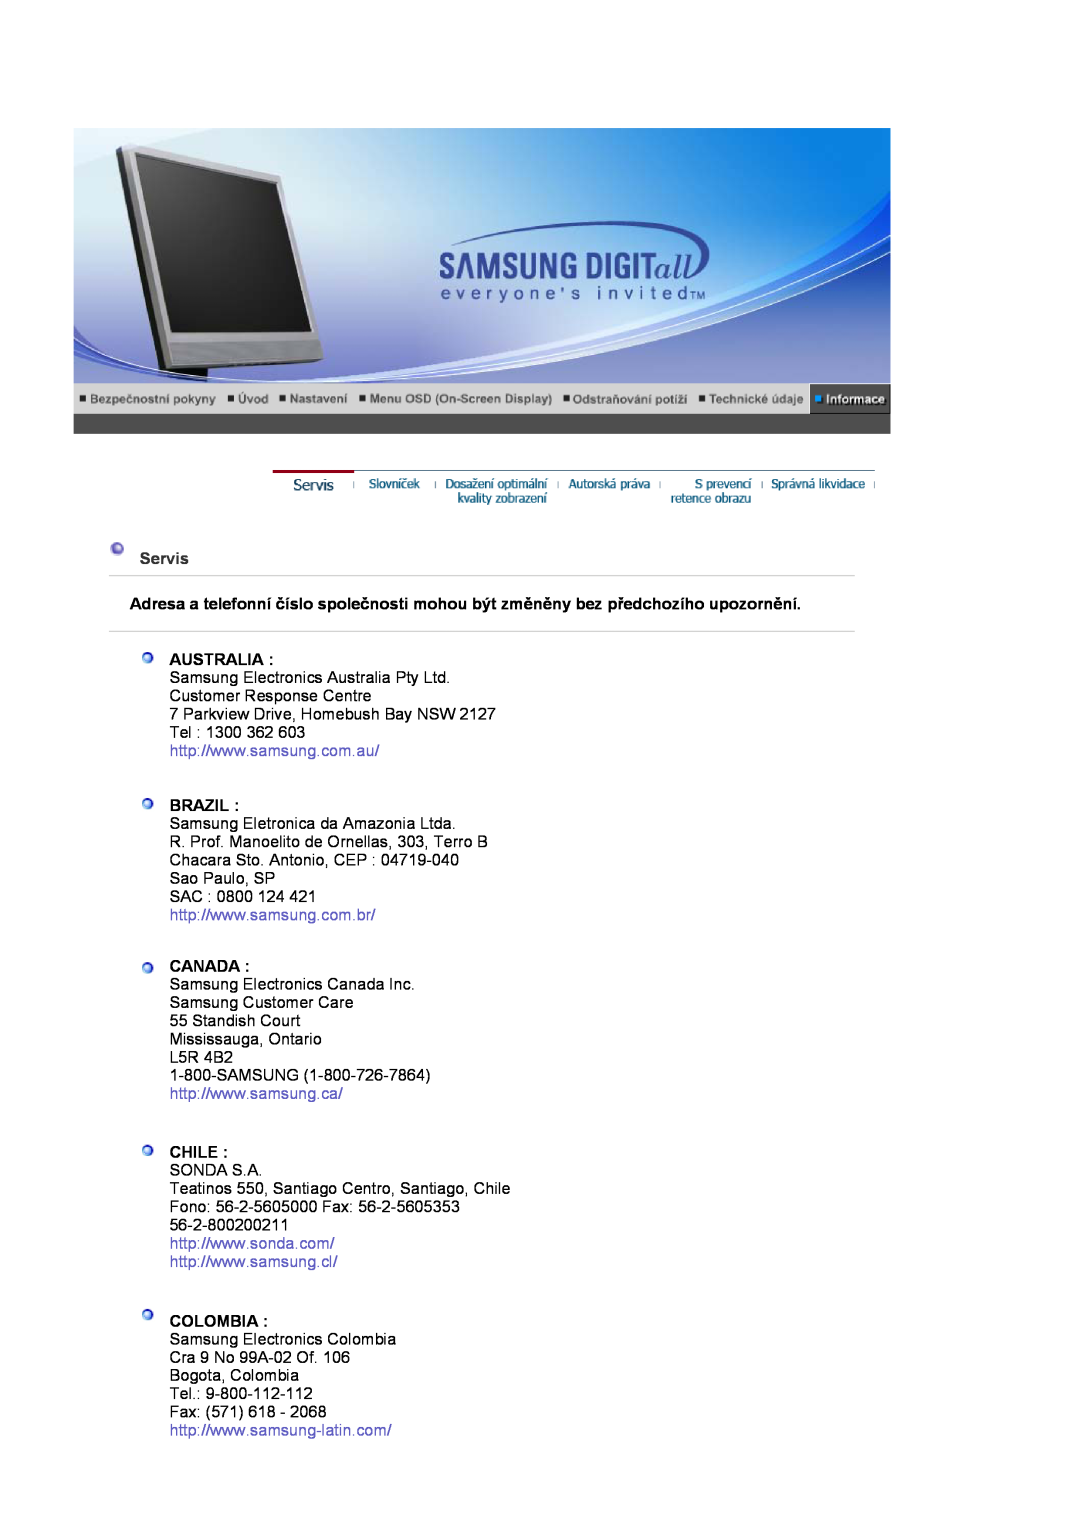 Samsung LS17MJSTSE/EDC, LS19MJSTS7/EDC, LS17MJSKSZ/EDC manual Servis, Australia, Brazil, Canada, Chile Sonda S.A, Colombia 